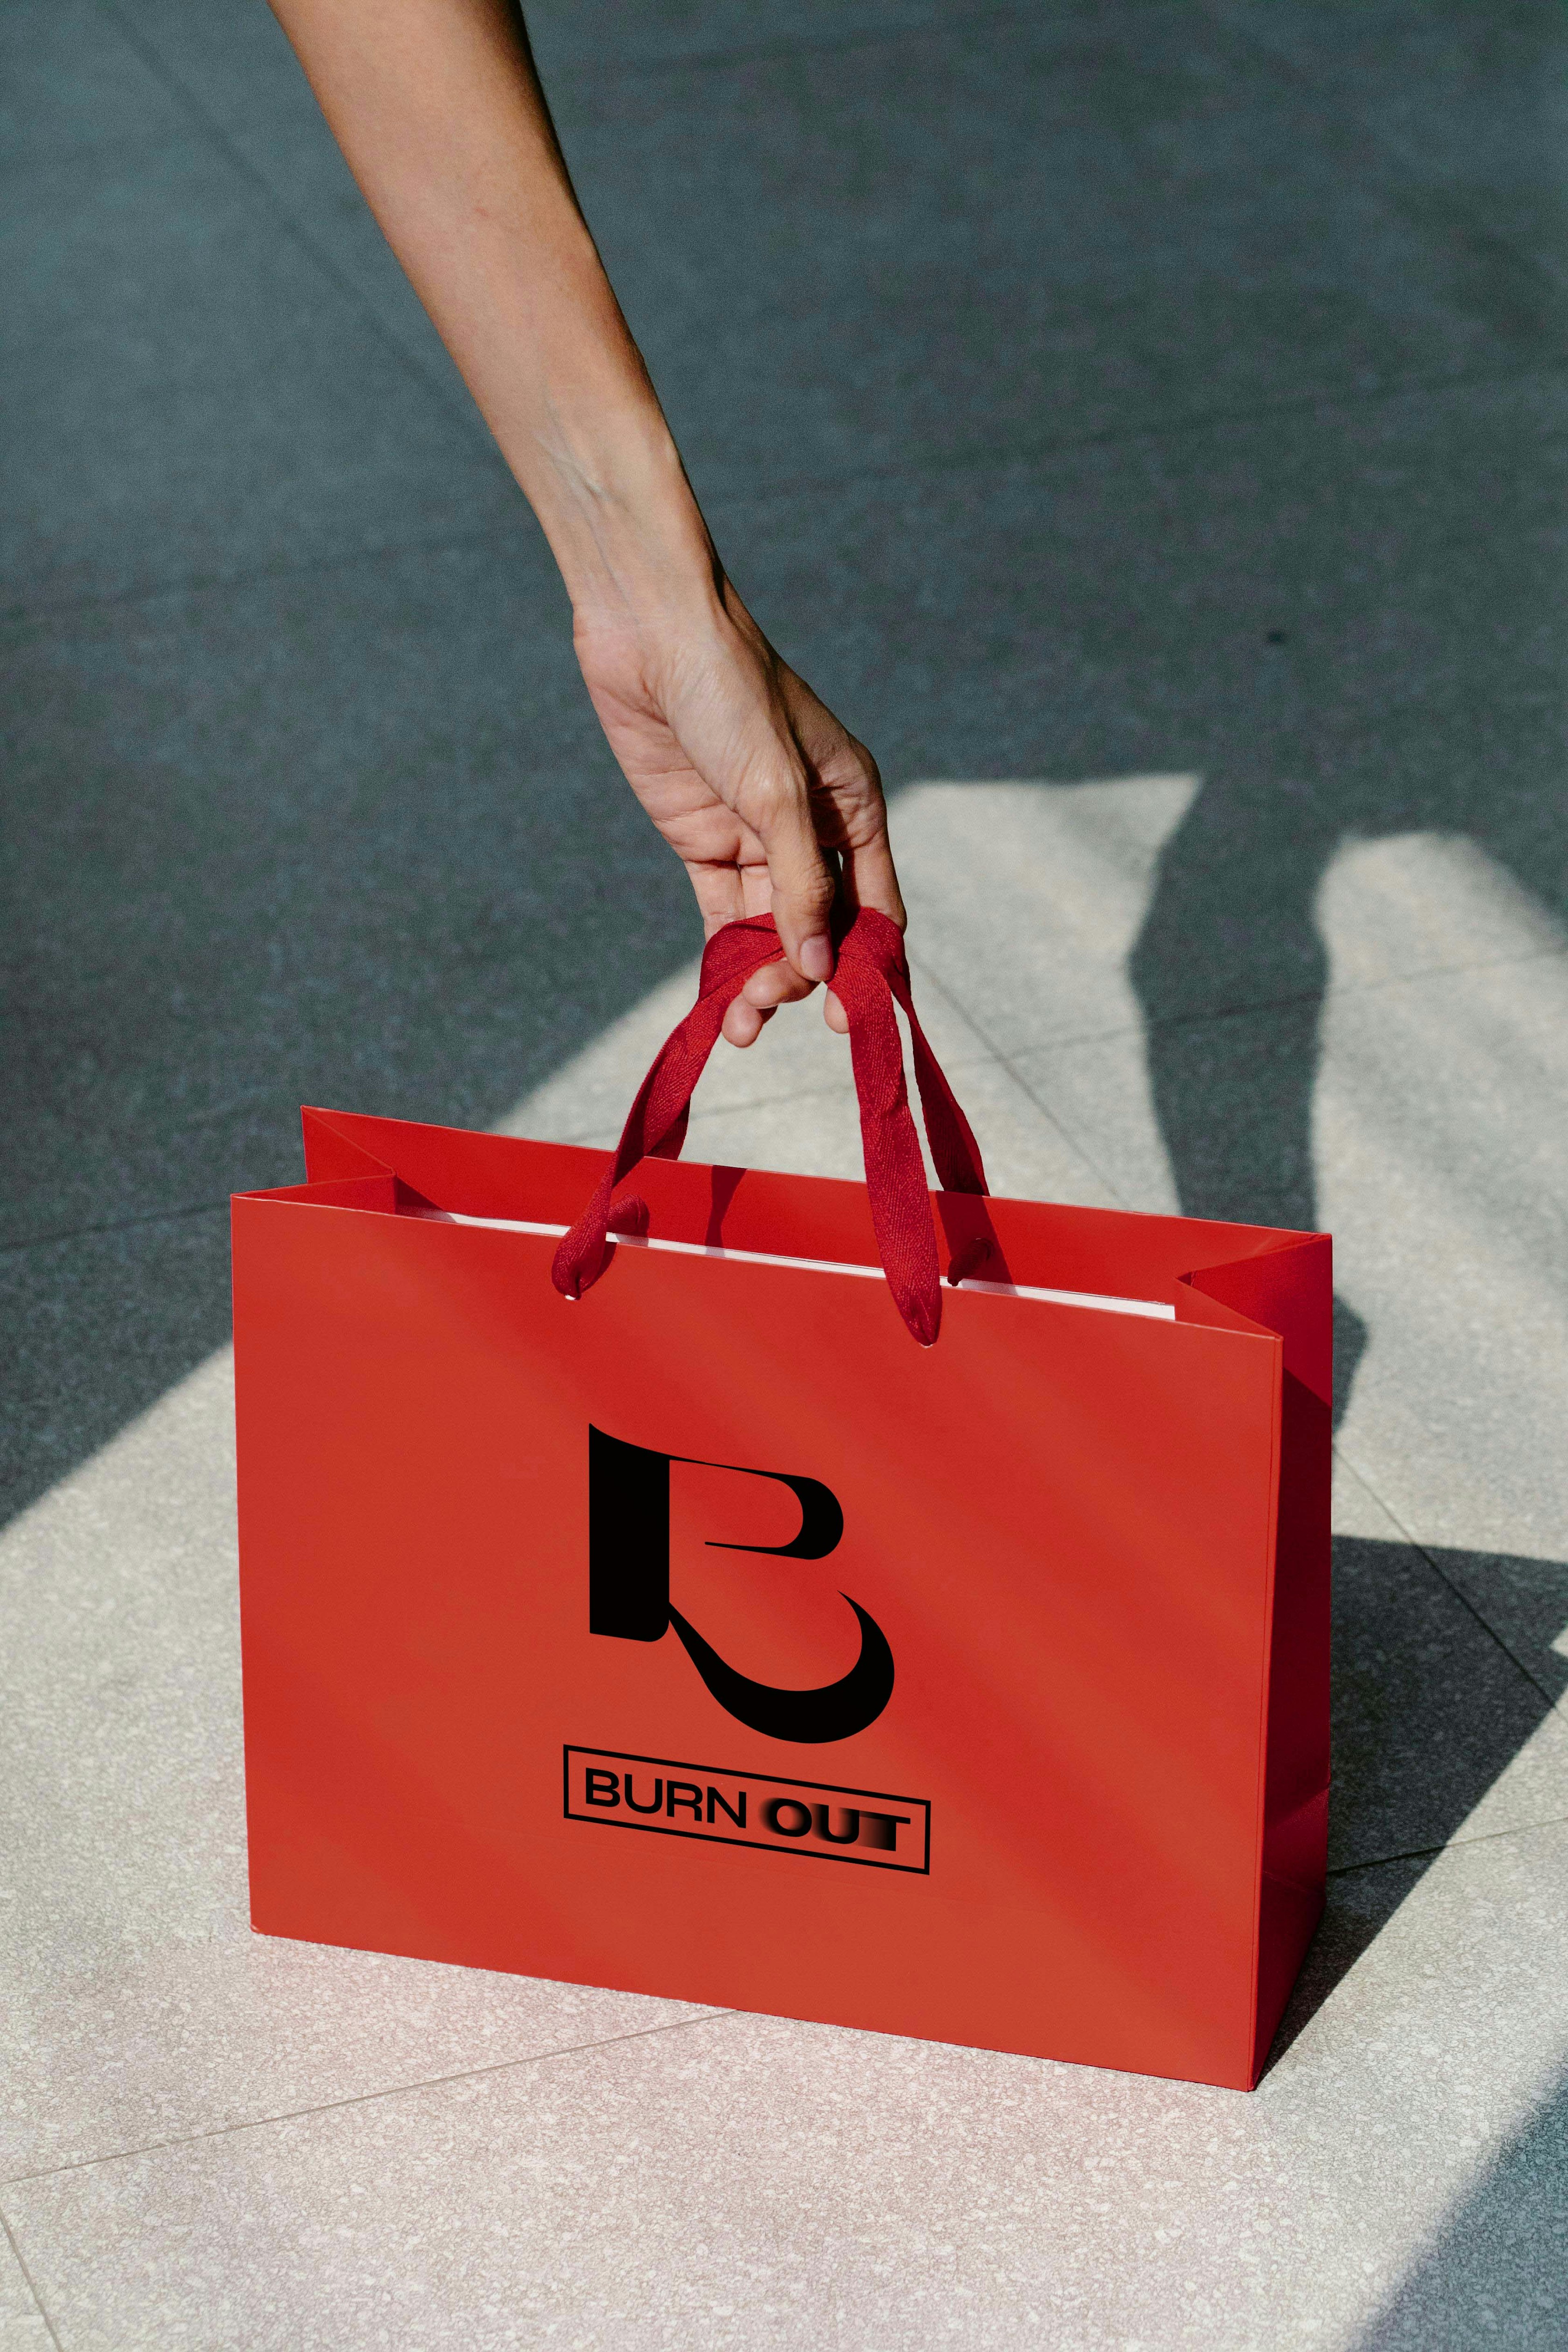 Burnout themed gift bag